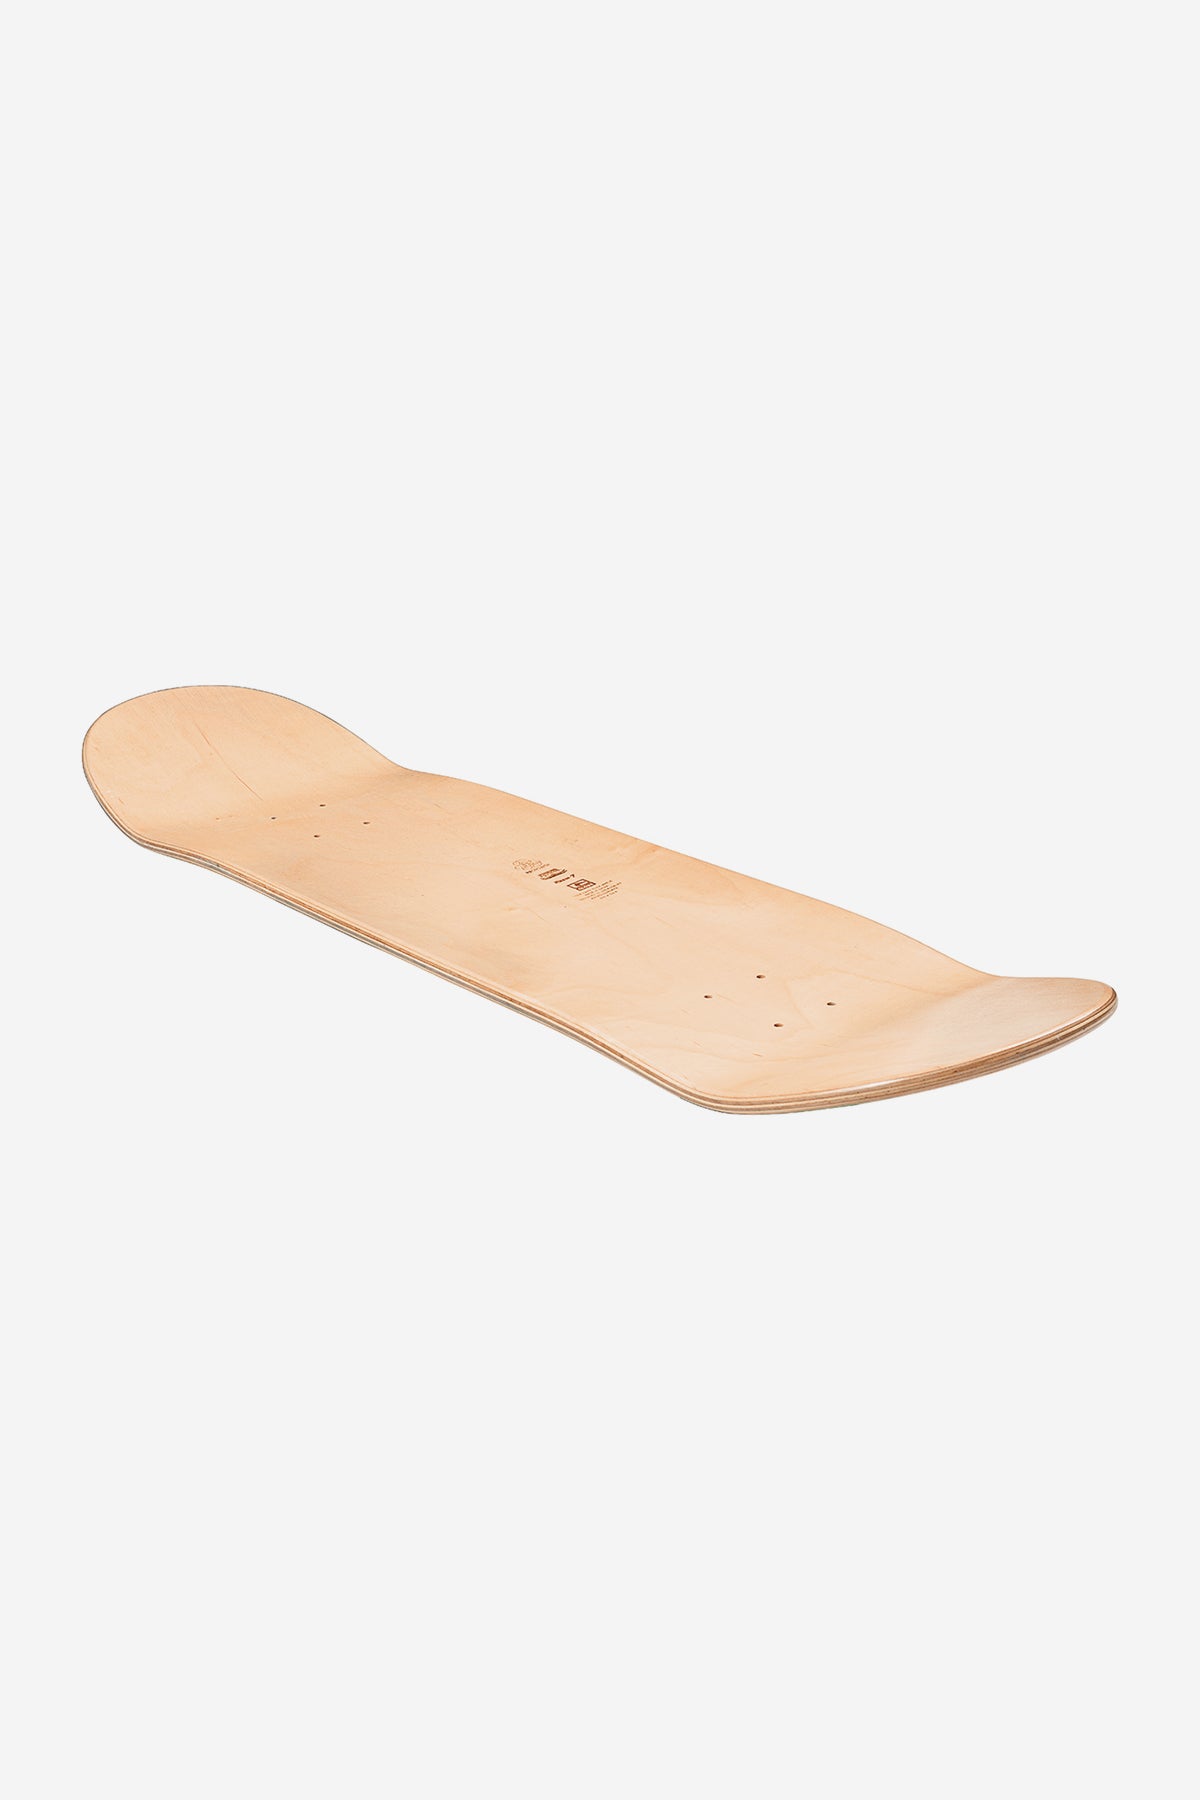 Globe terrestre - Goodstock - Sahara - 8.375" Skateboard Deck